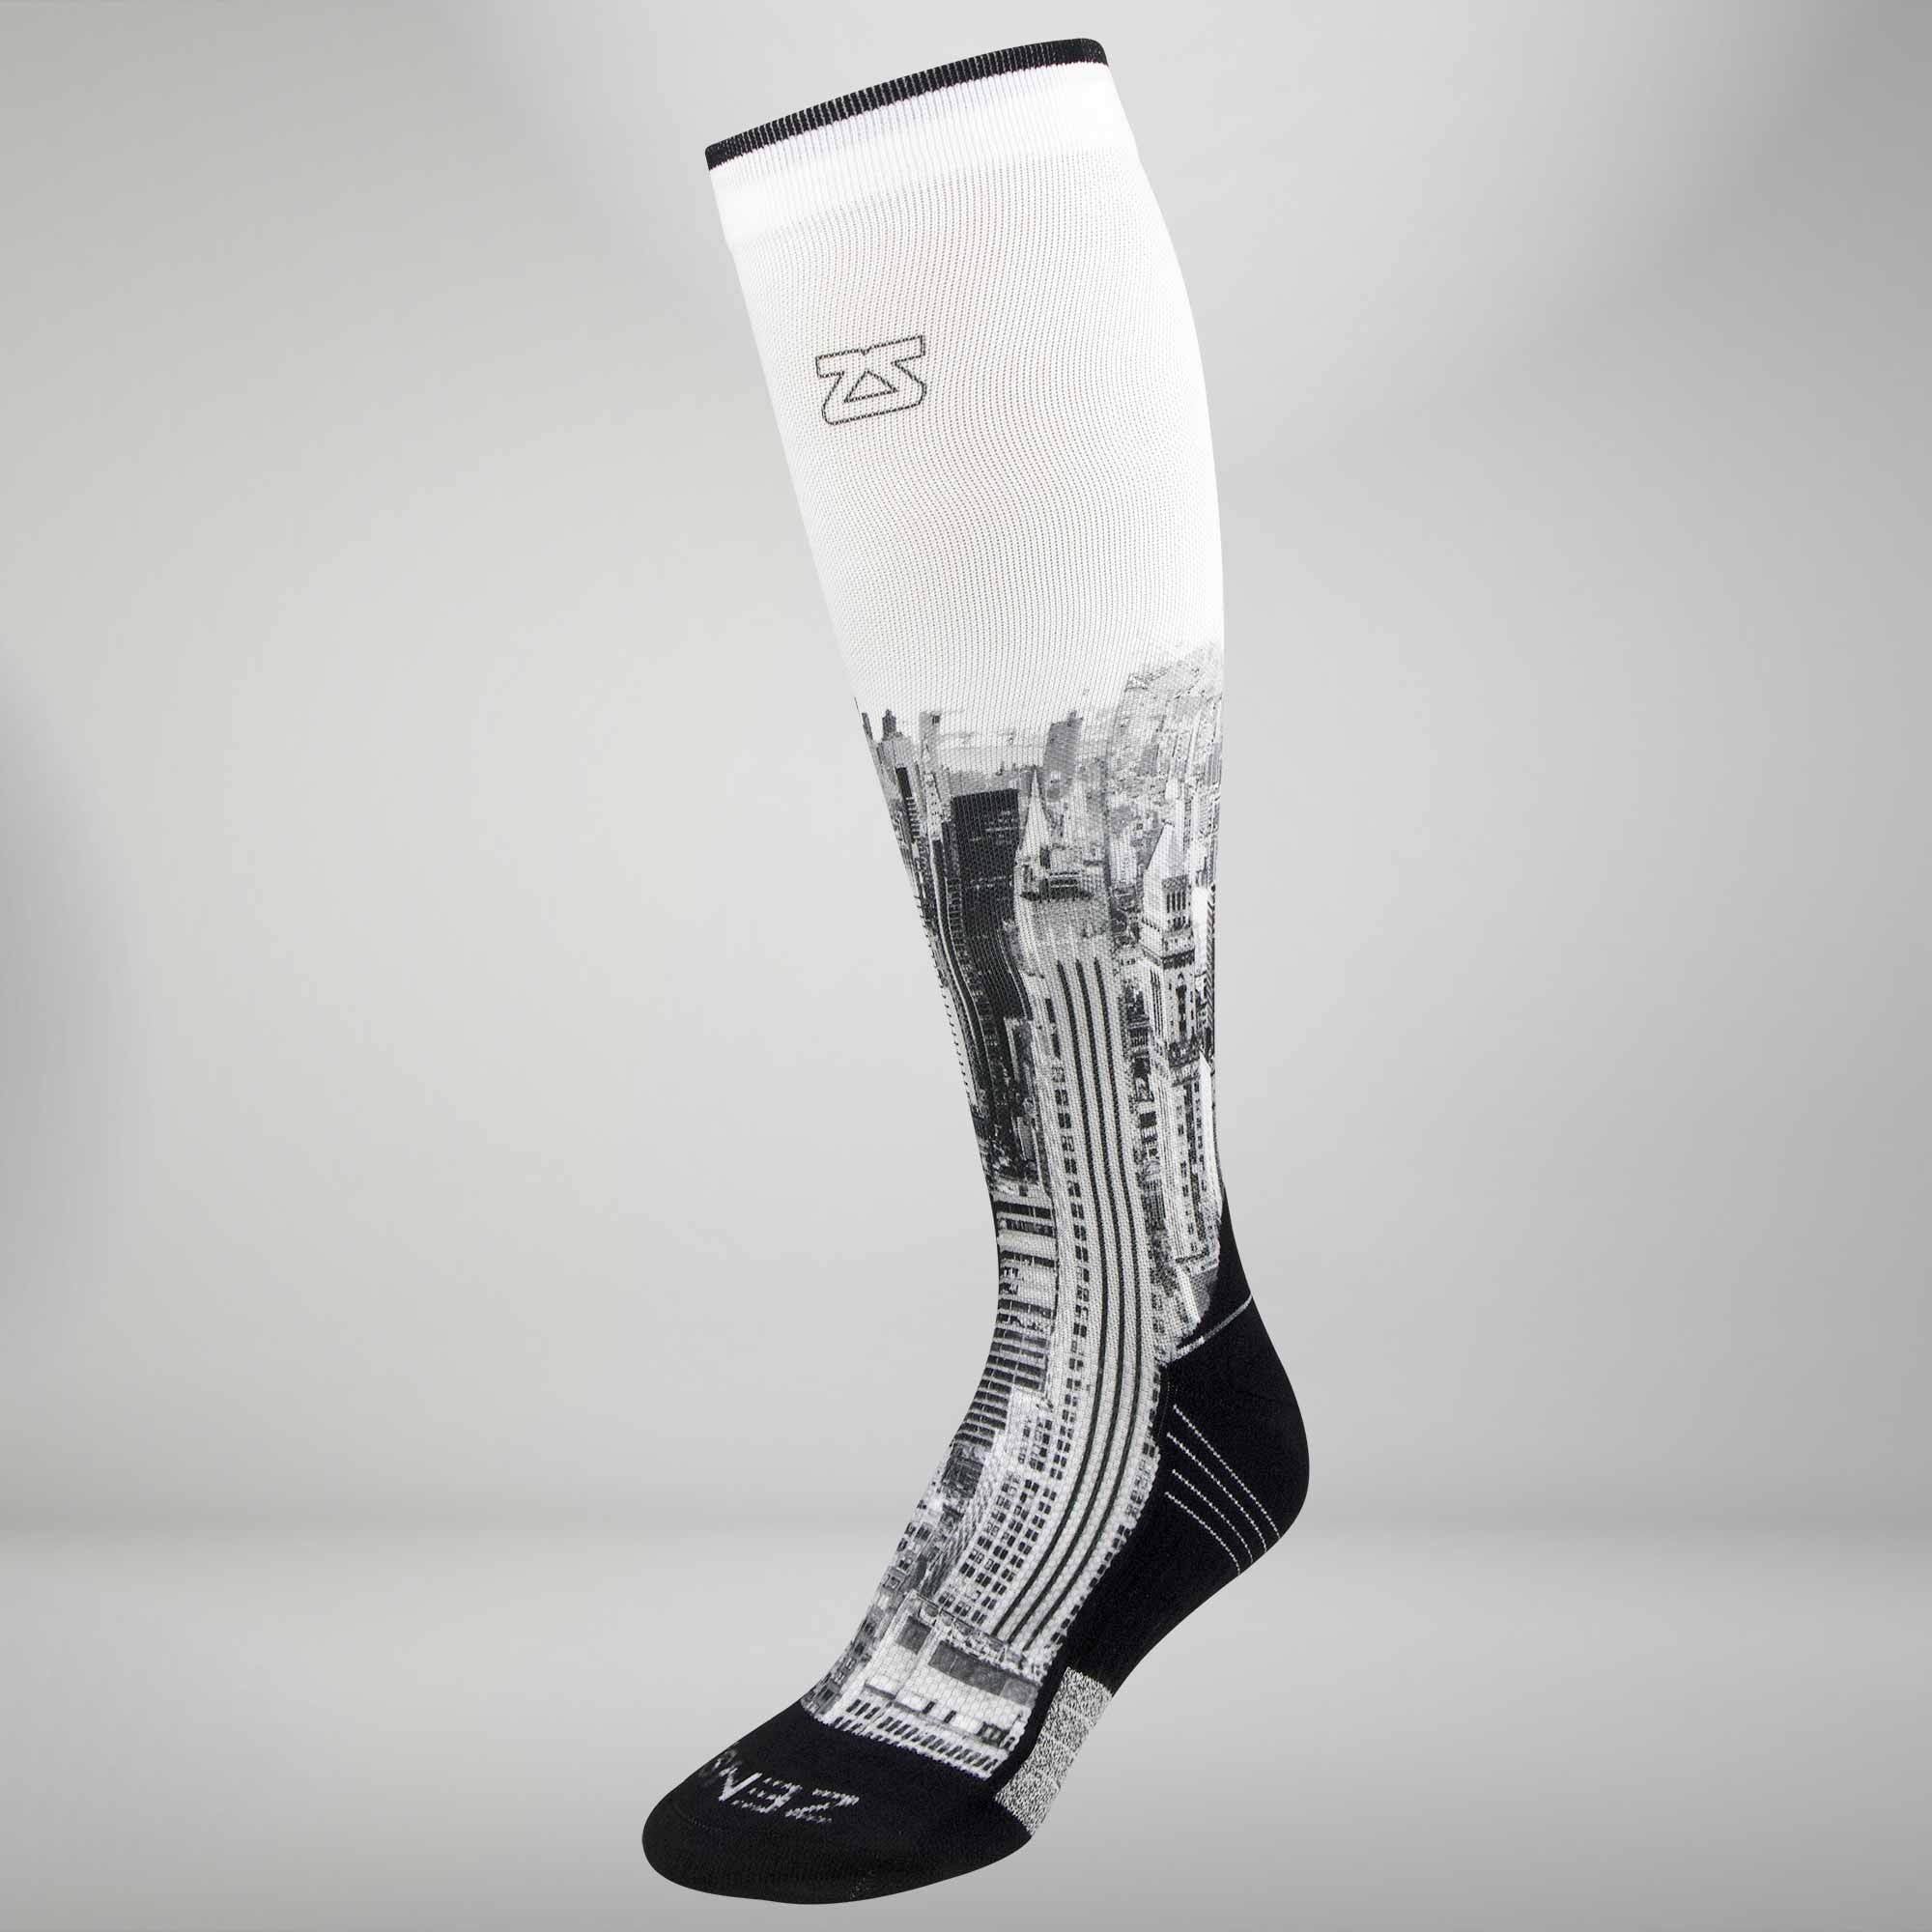 New Running Socks, Marathon Socks | Zensah